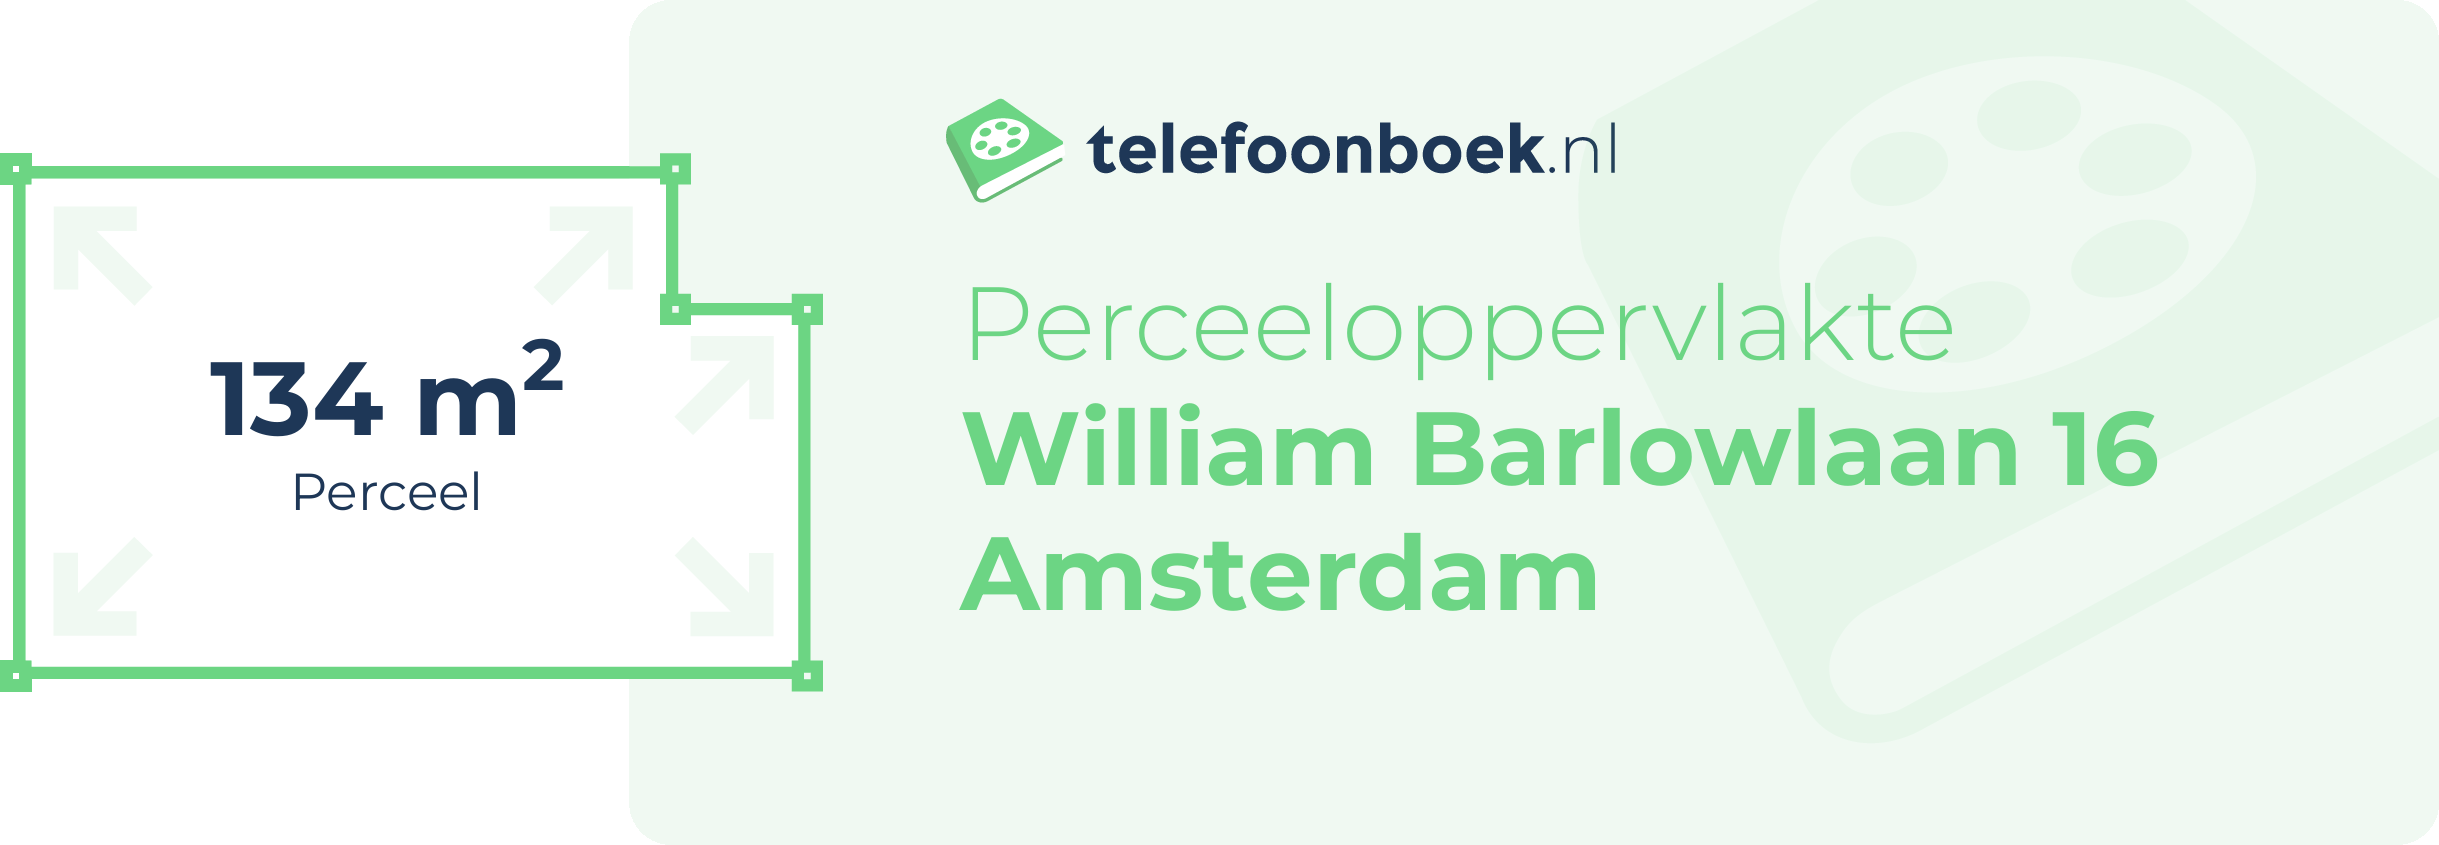 Perceeloppervlakte William Barlowlaan 16 Amsterdam